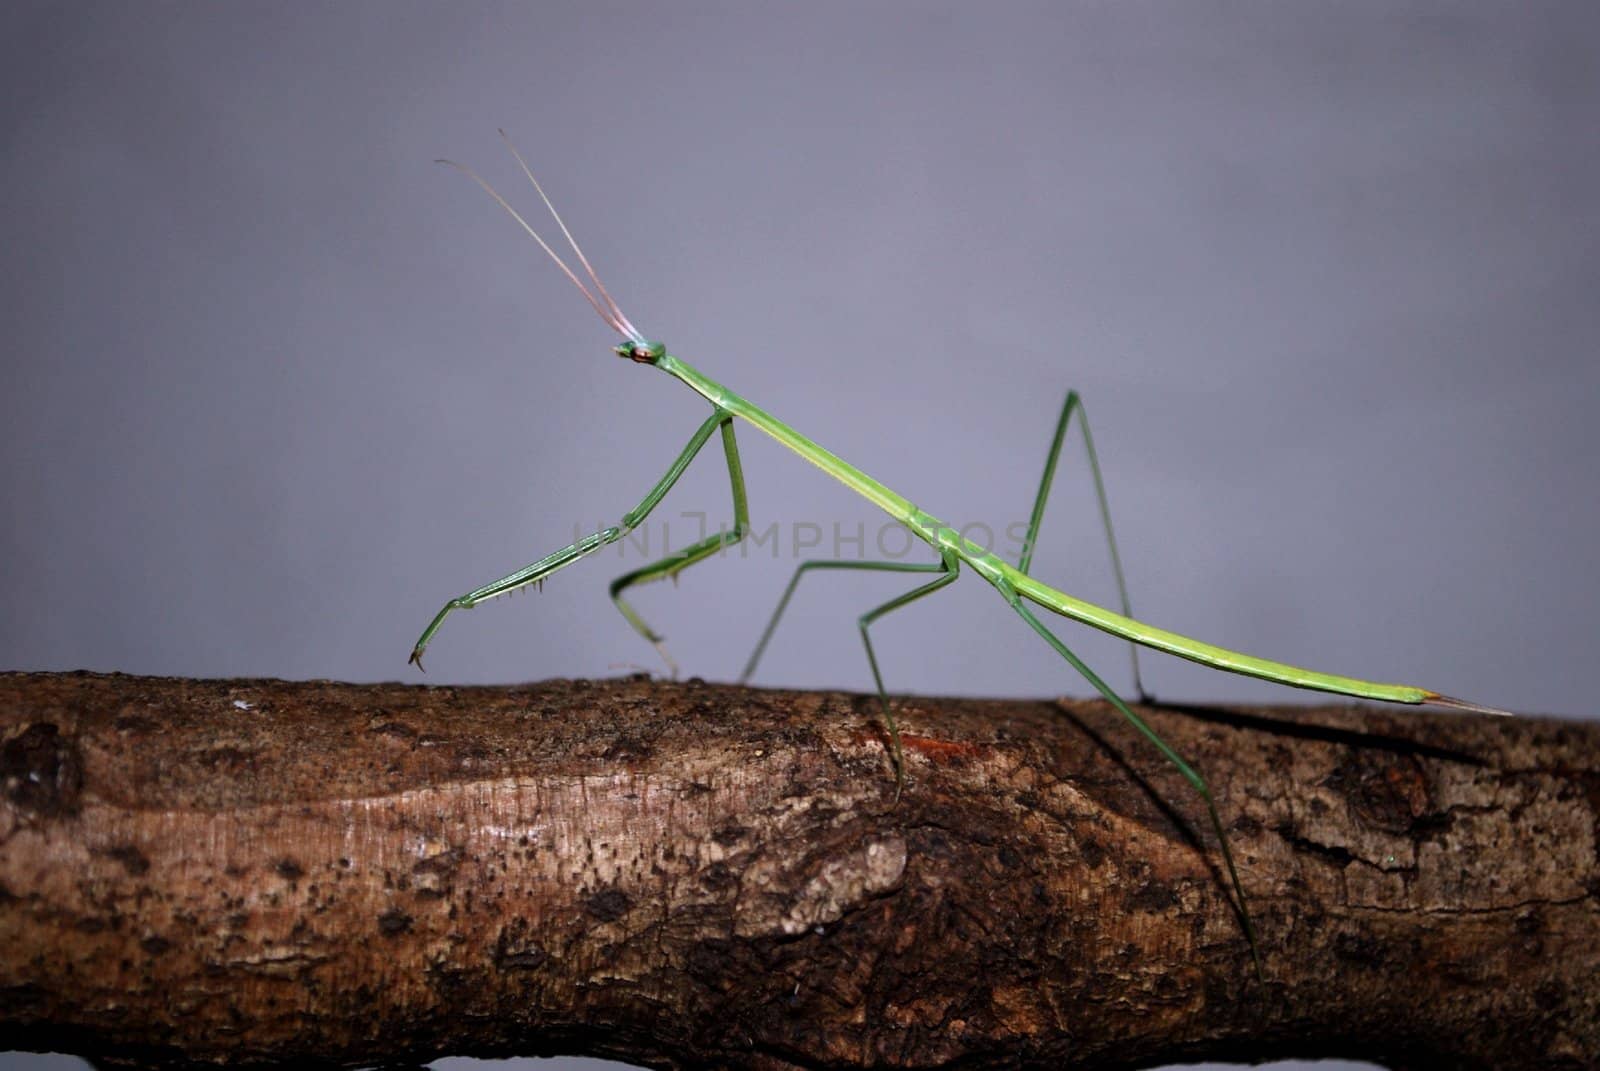 preying mantis walking on a stick